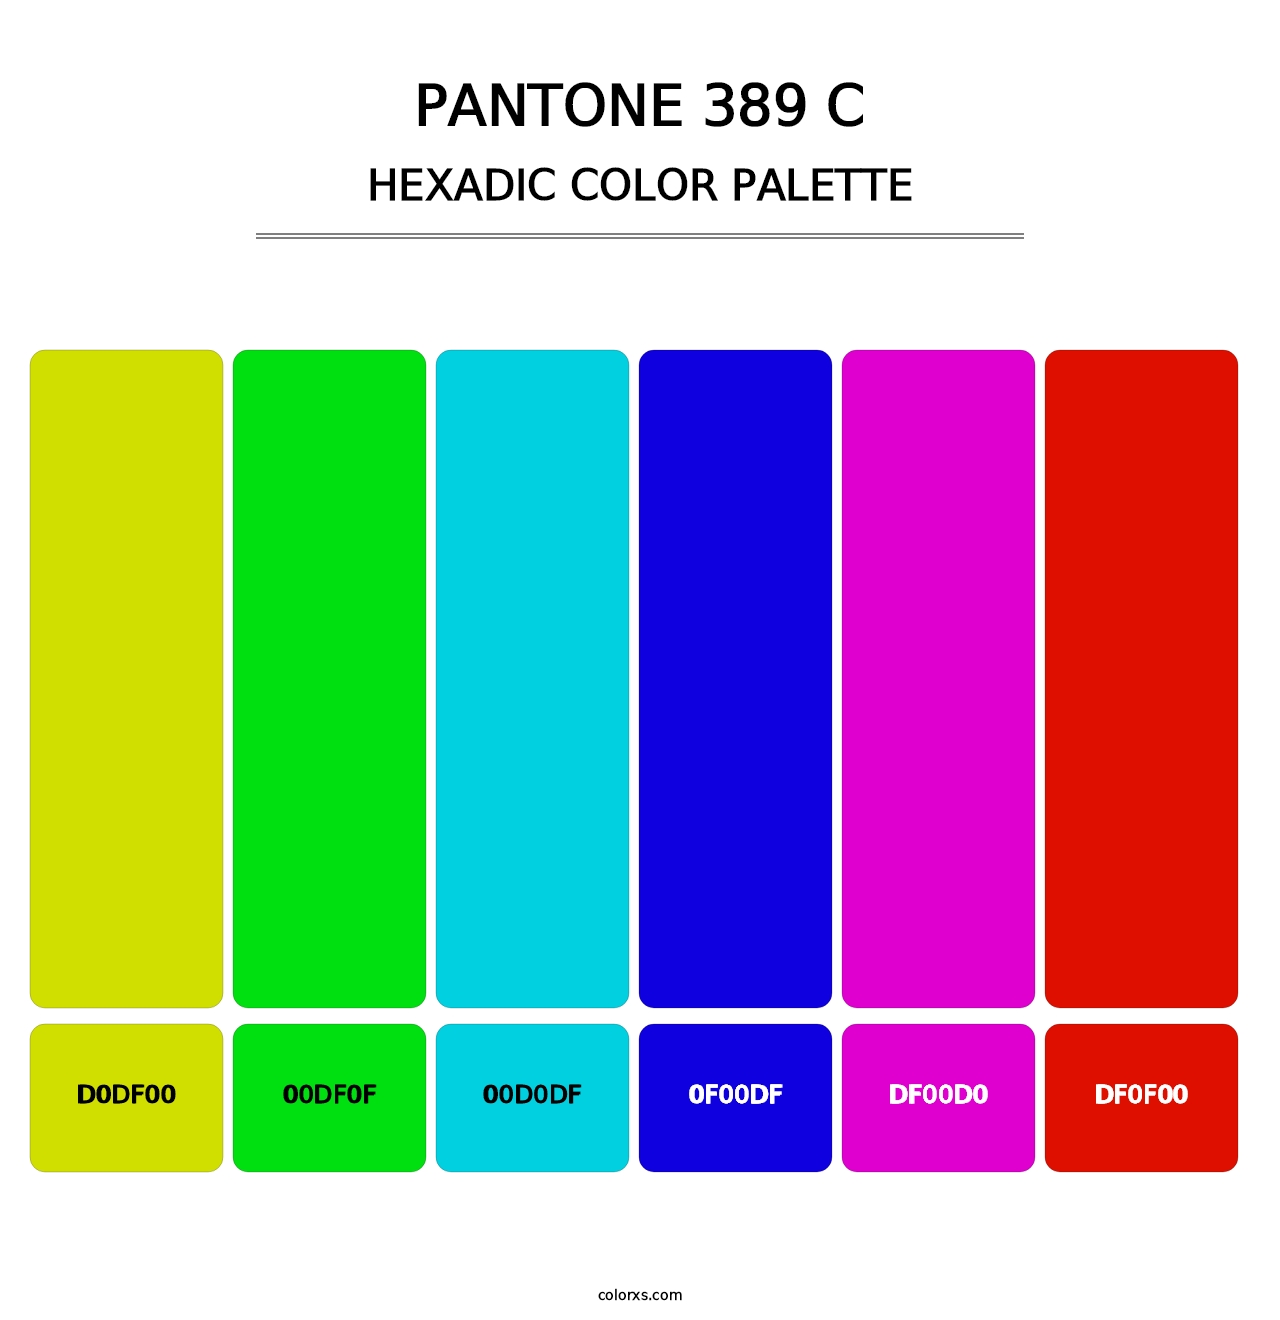 PANTONE 389 C - Hexadic Color Palette